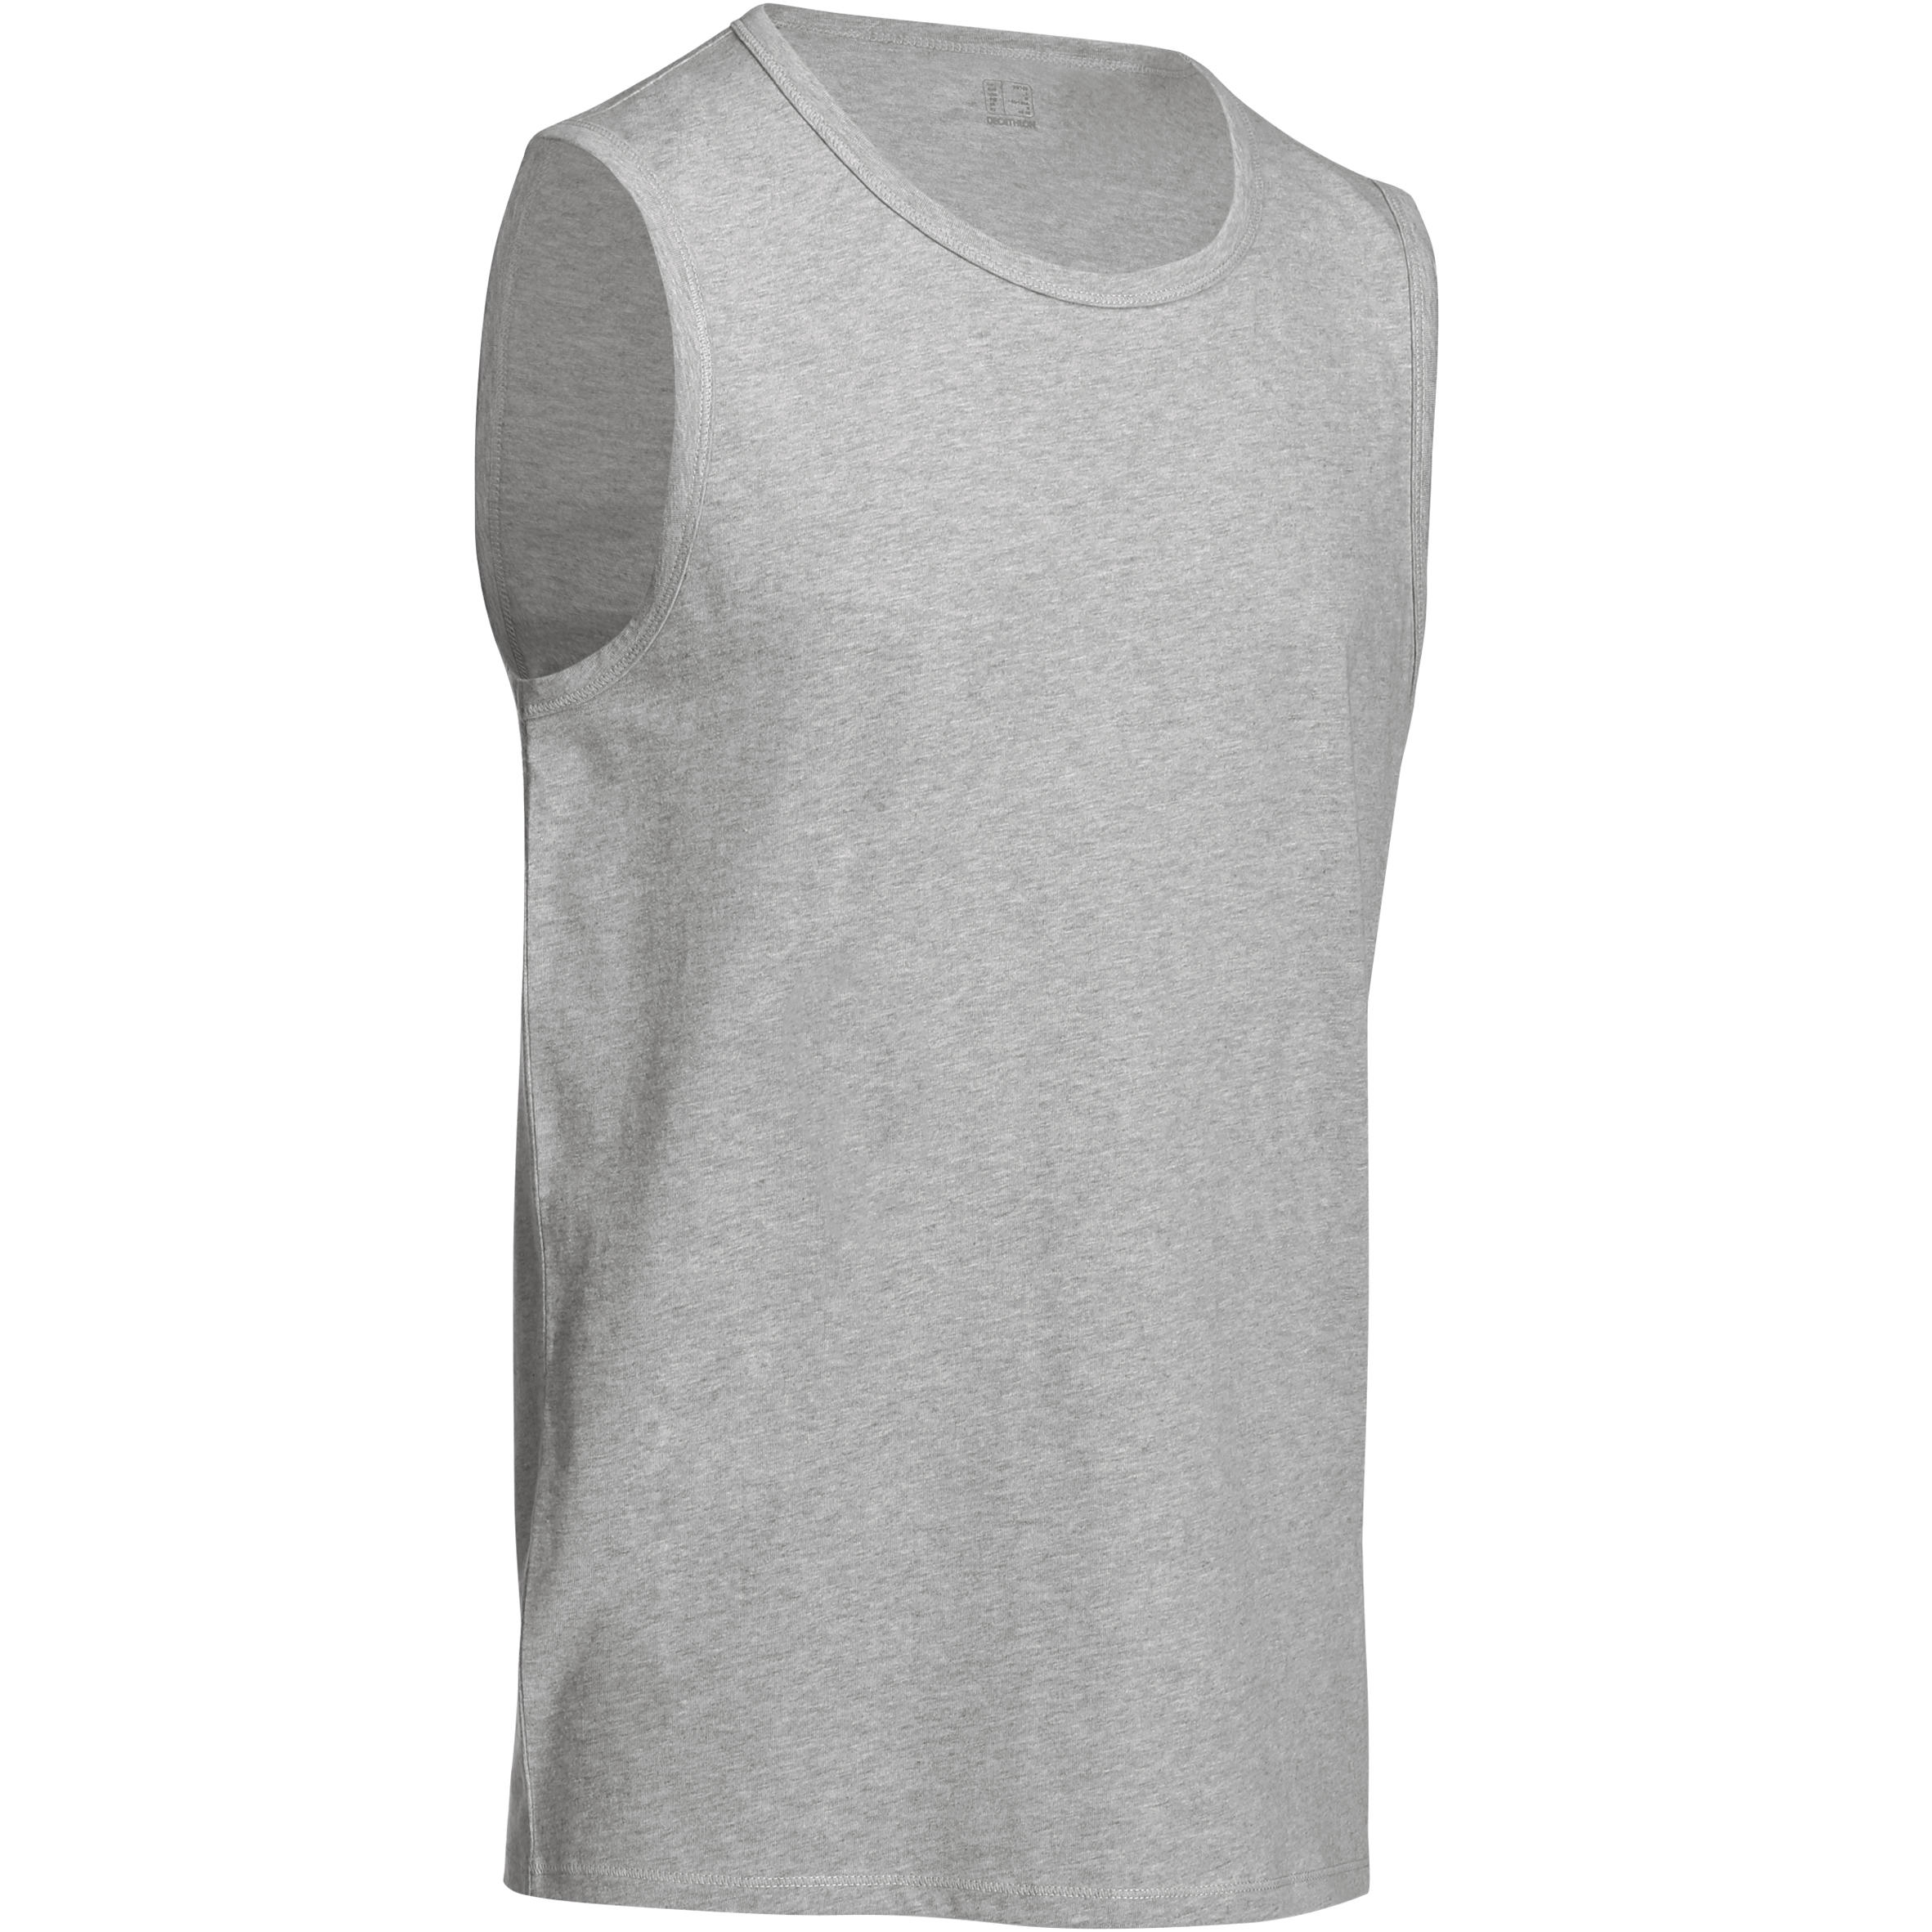 DOMYOS Essential Cotton Fitness Tank Top - Grey